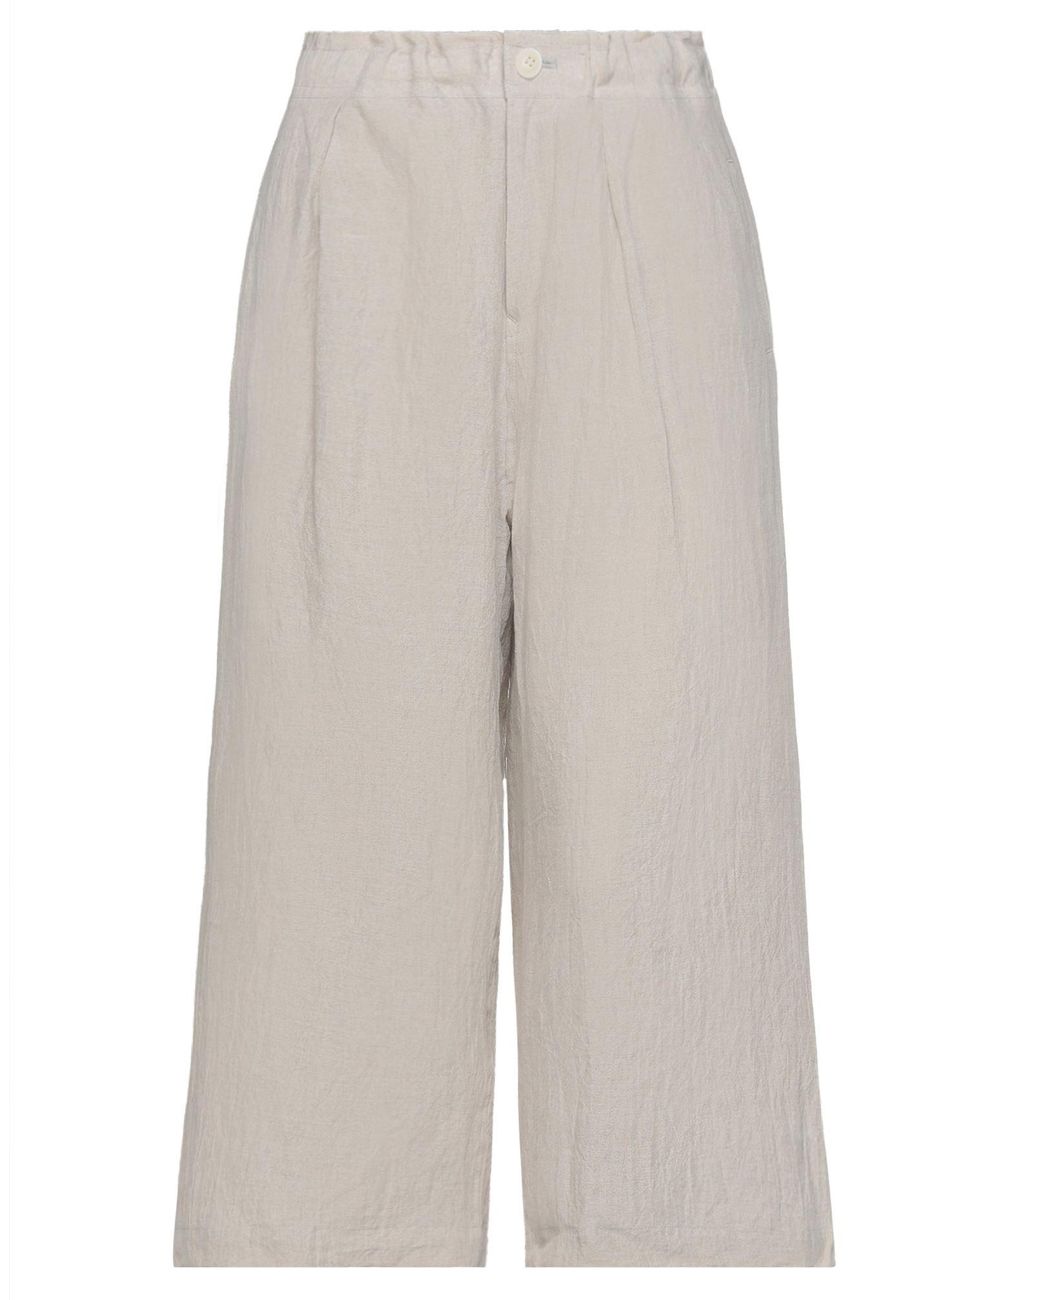 Y's Yohji Yamamoto Linen 3/4-length Trousers in Khaki (Natural) - Lyst